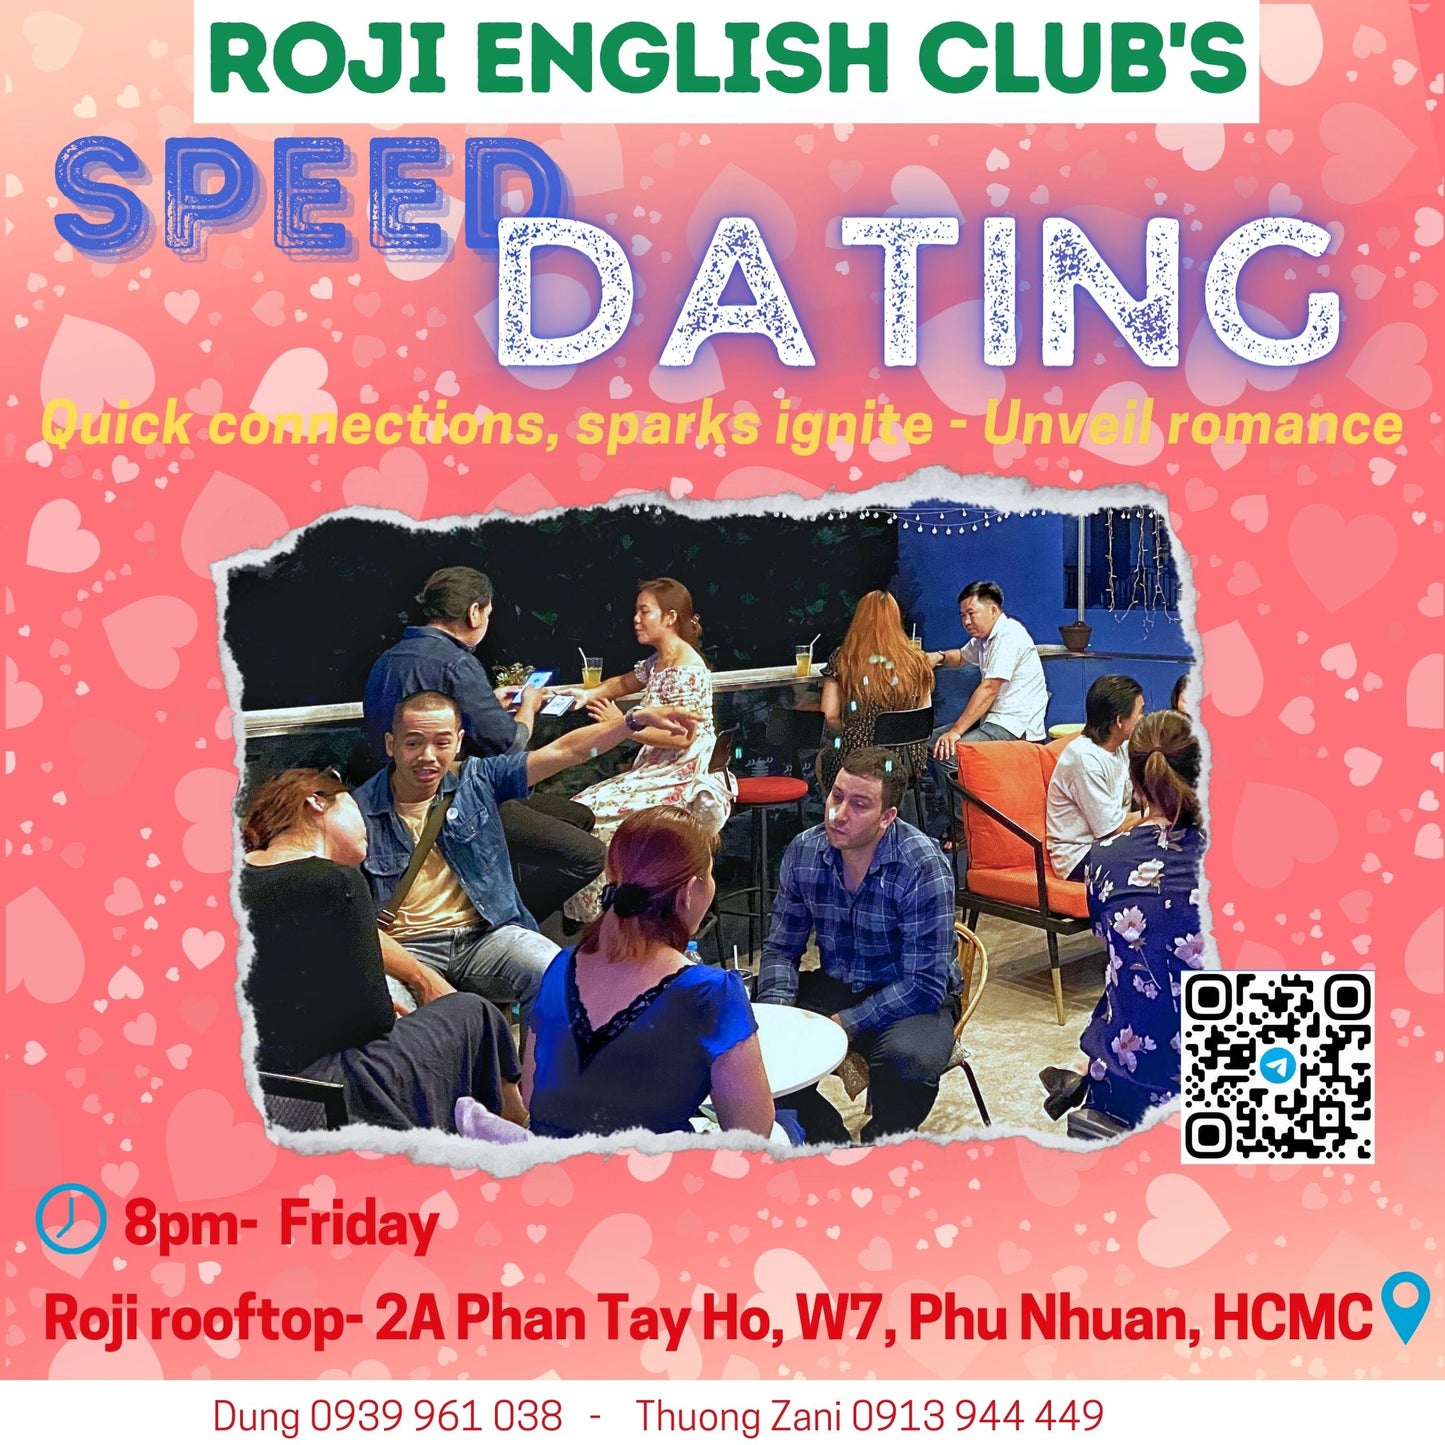 Fridays: Quiz night |Dinner together | Speed Friending | Speed Dating